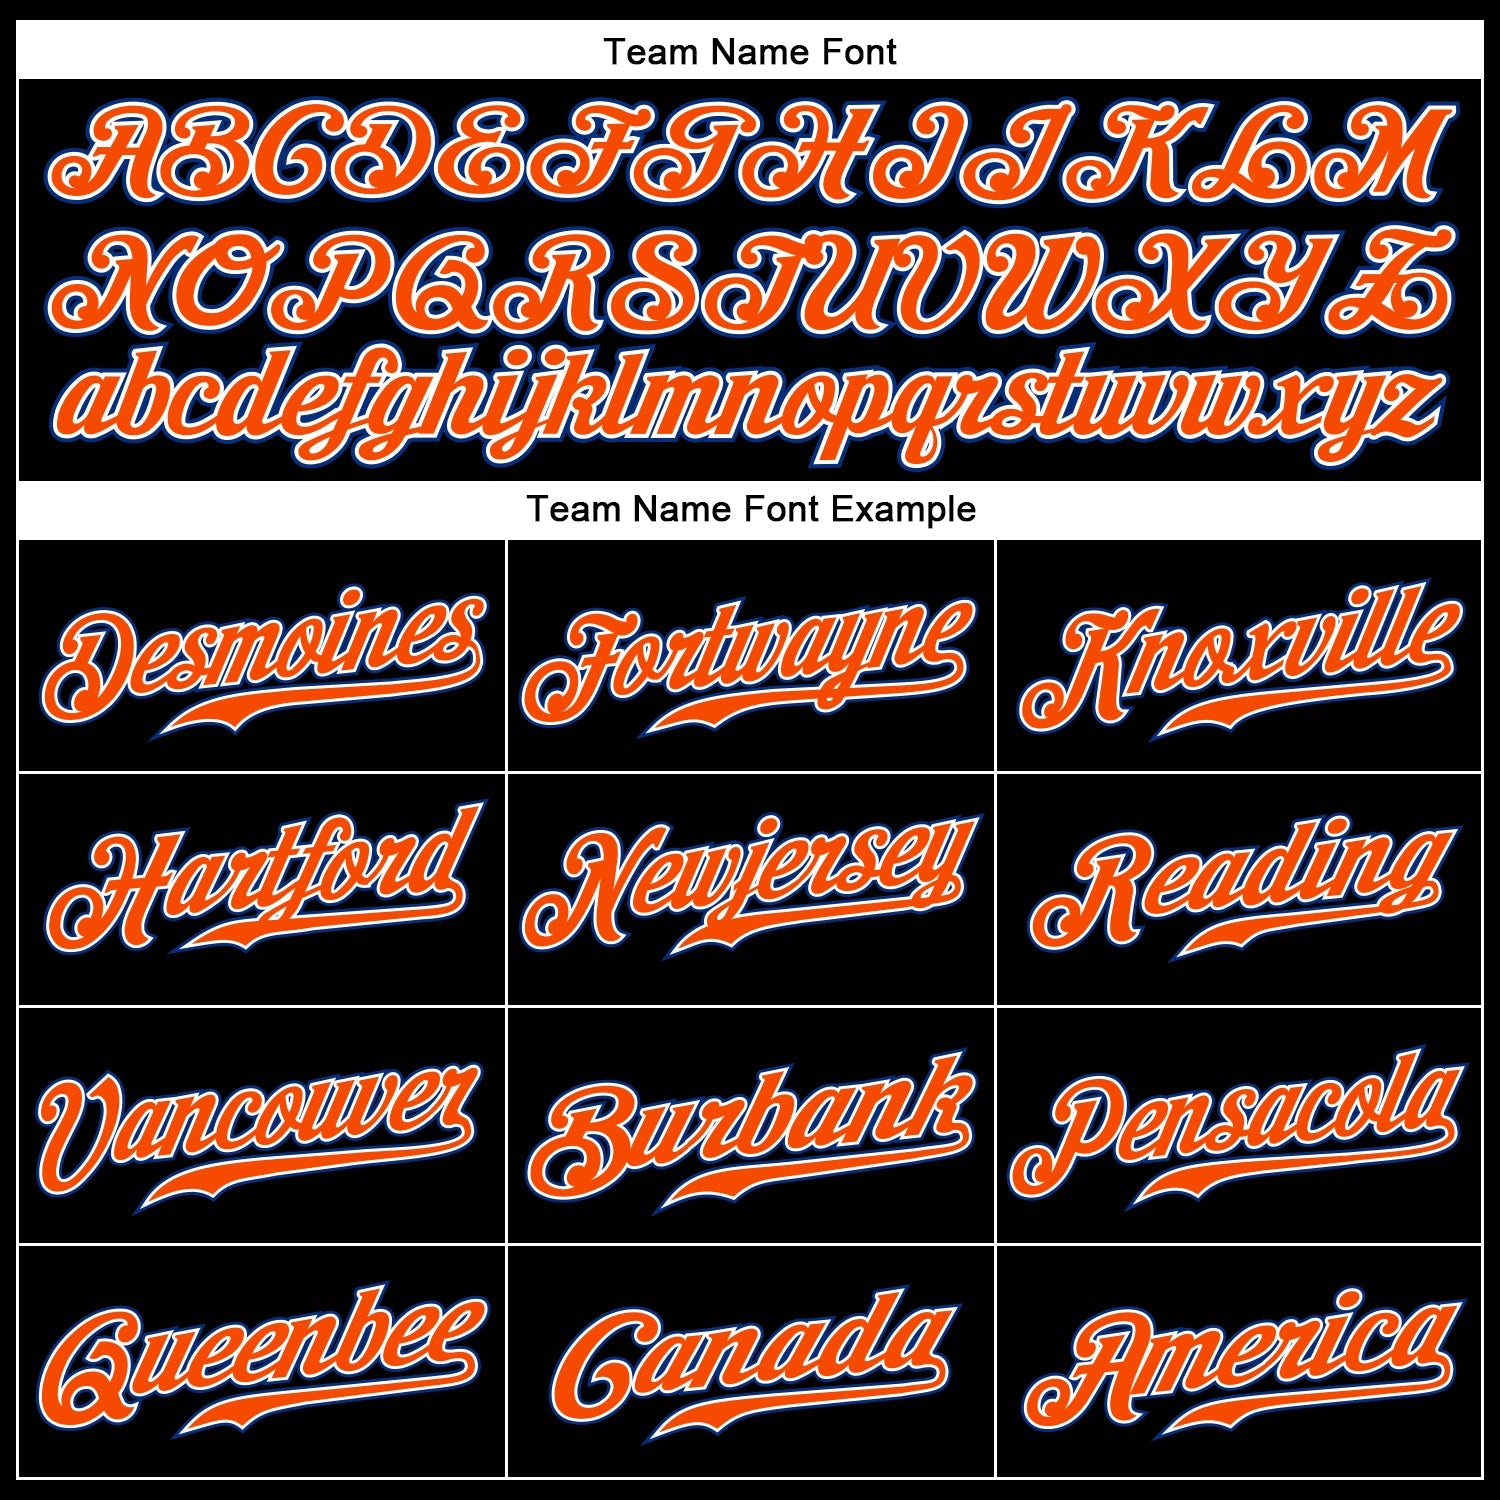 Custom Black Royal-Orange Authentic Baseball Jersey